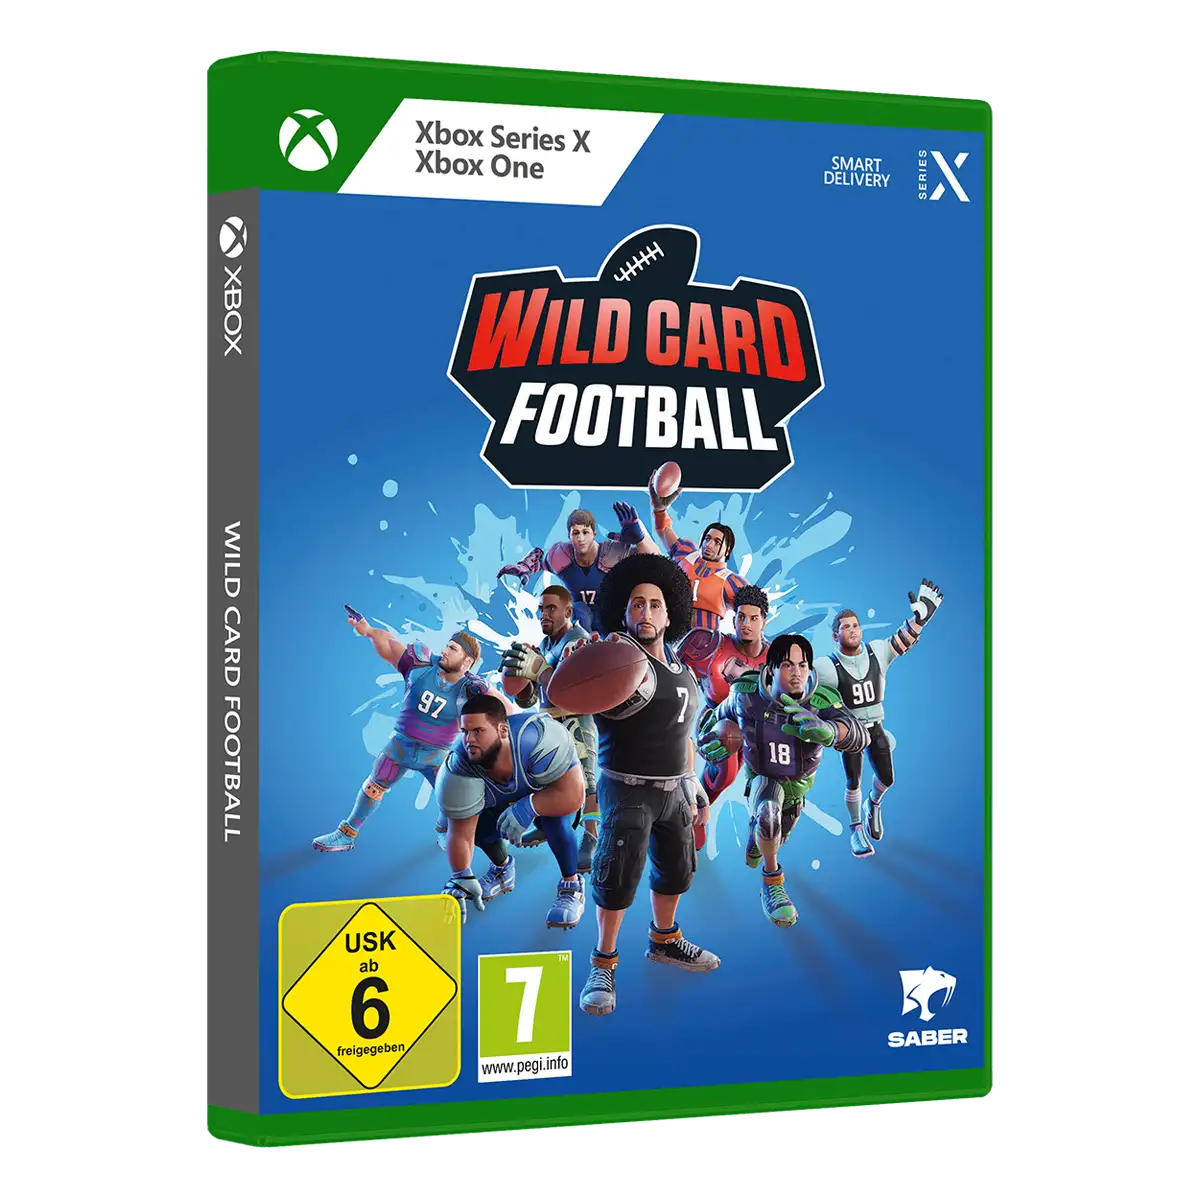 Wild Card Football (Xbox One / Xbox Series X) Image 2